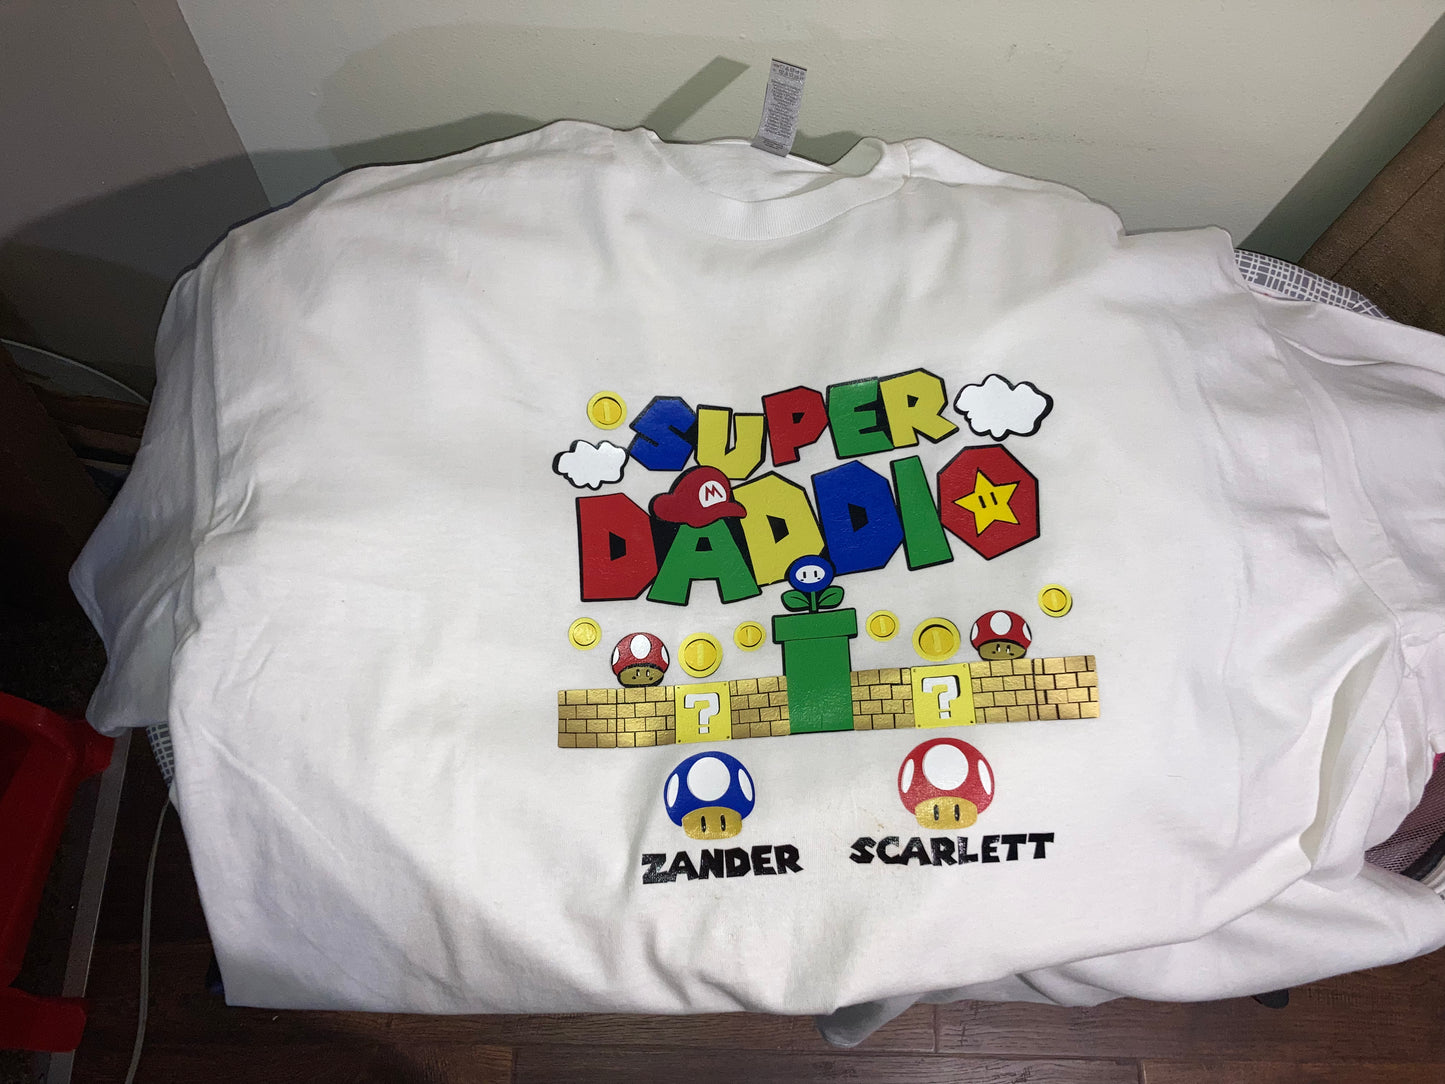 Official Dad Shirt